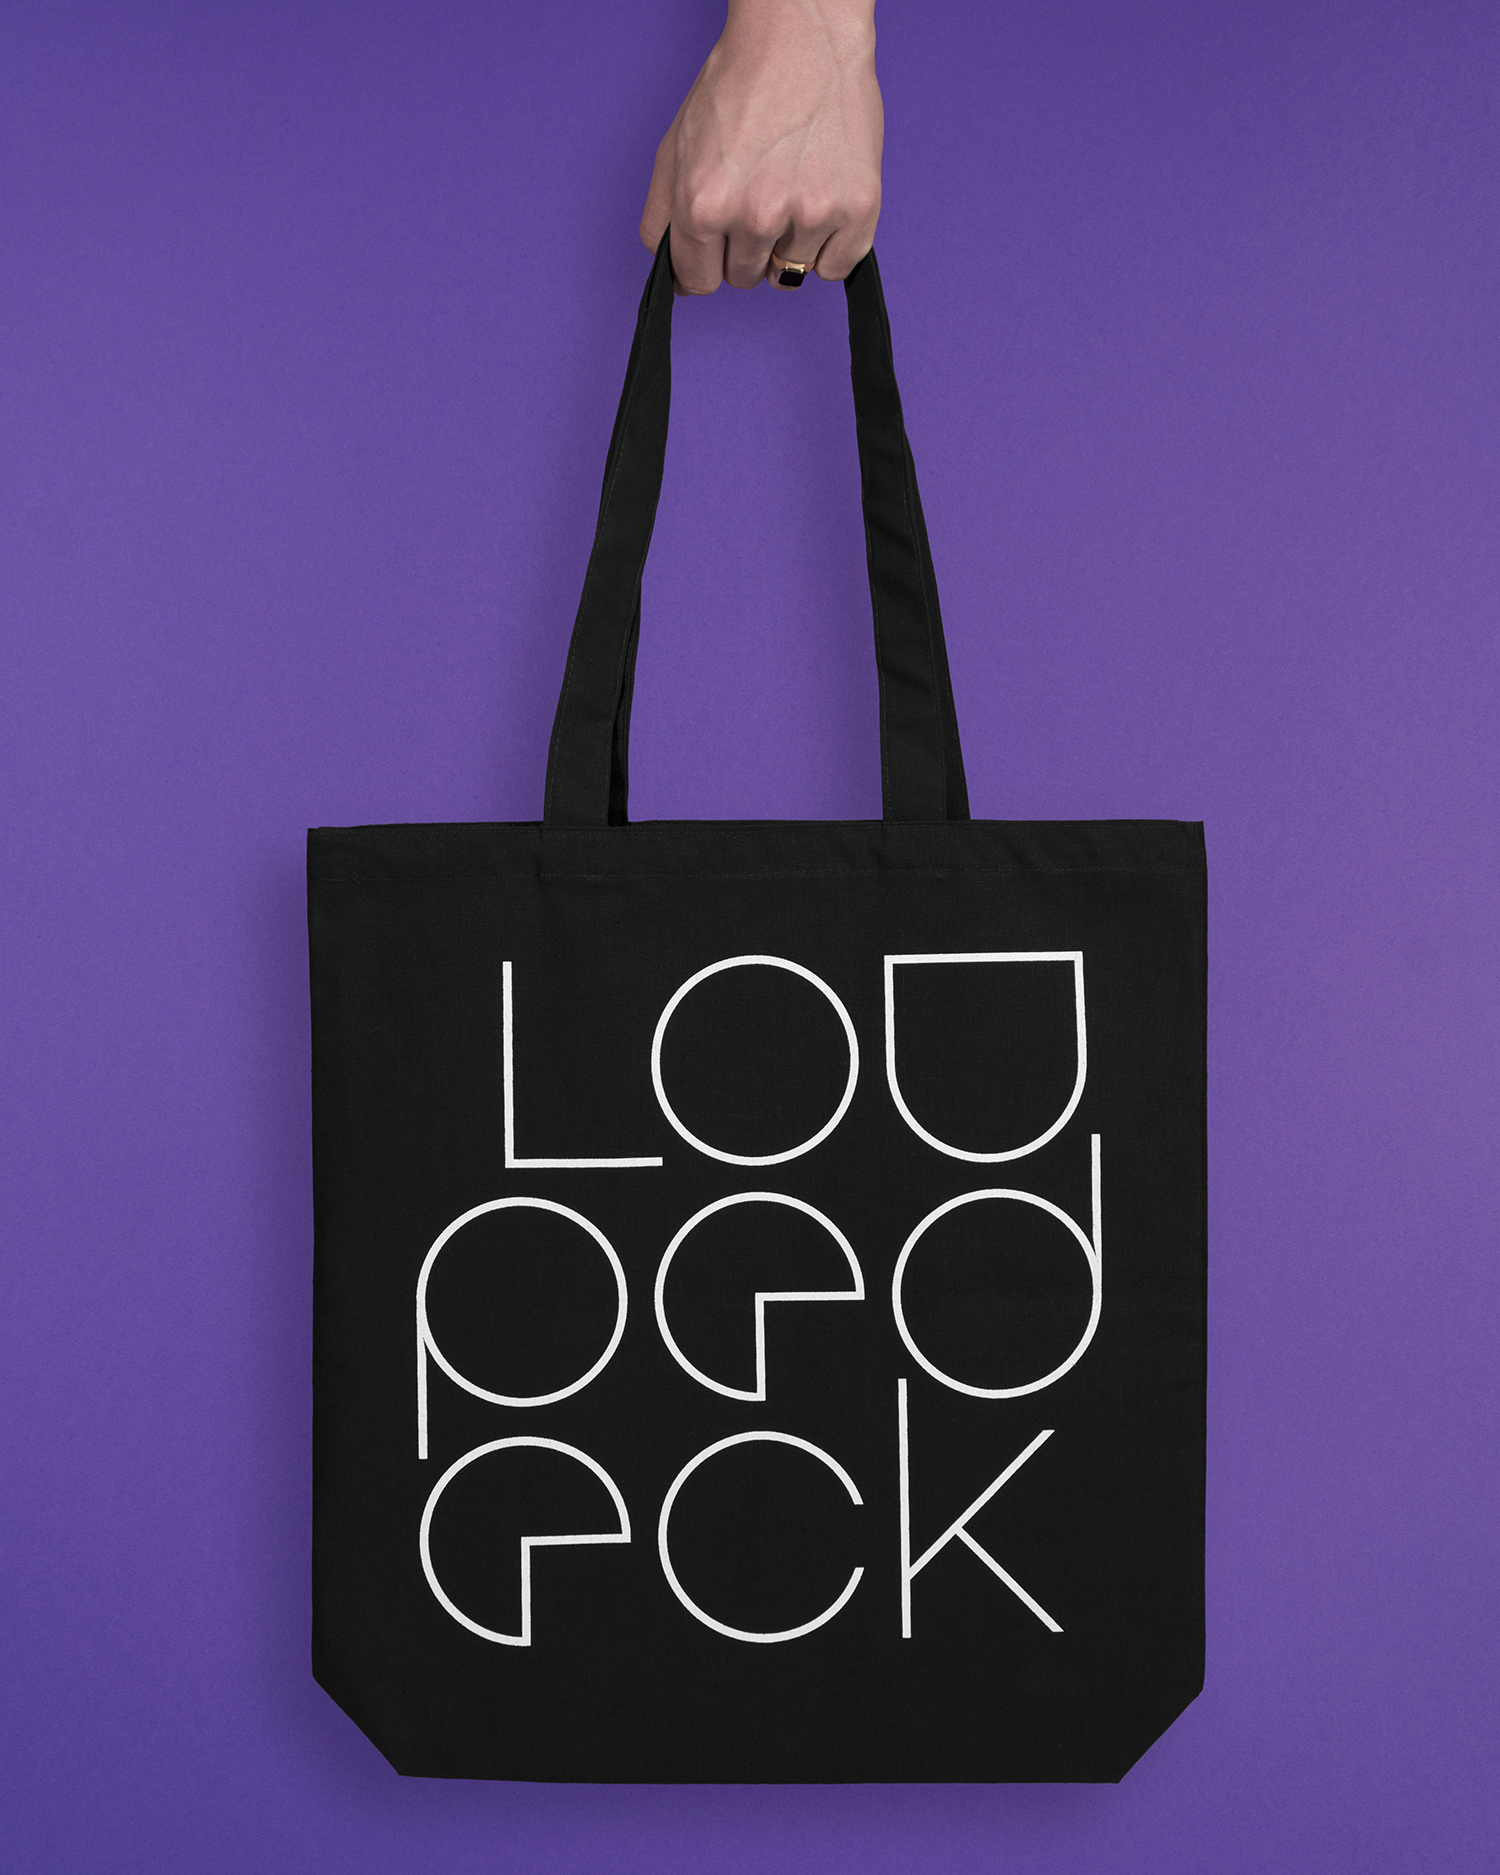 Tote Bag Design – Loupedeck by Bond, Finland